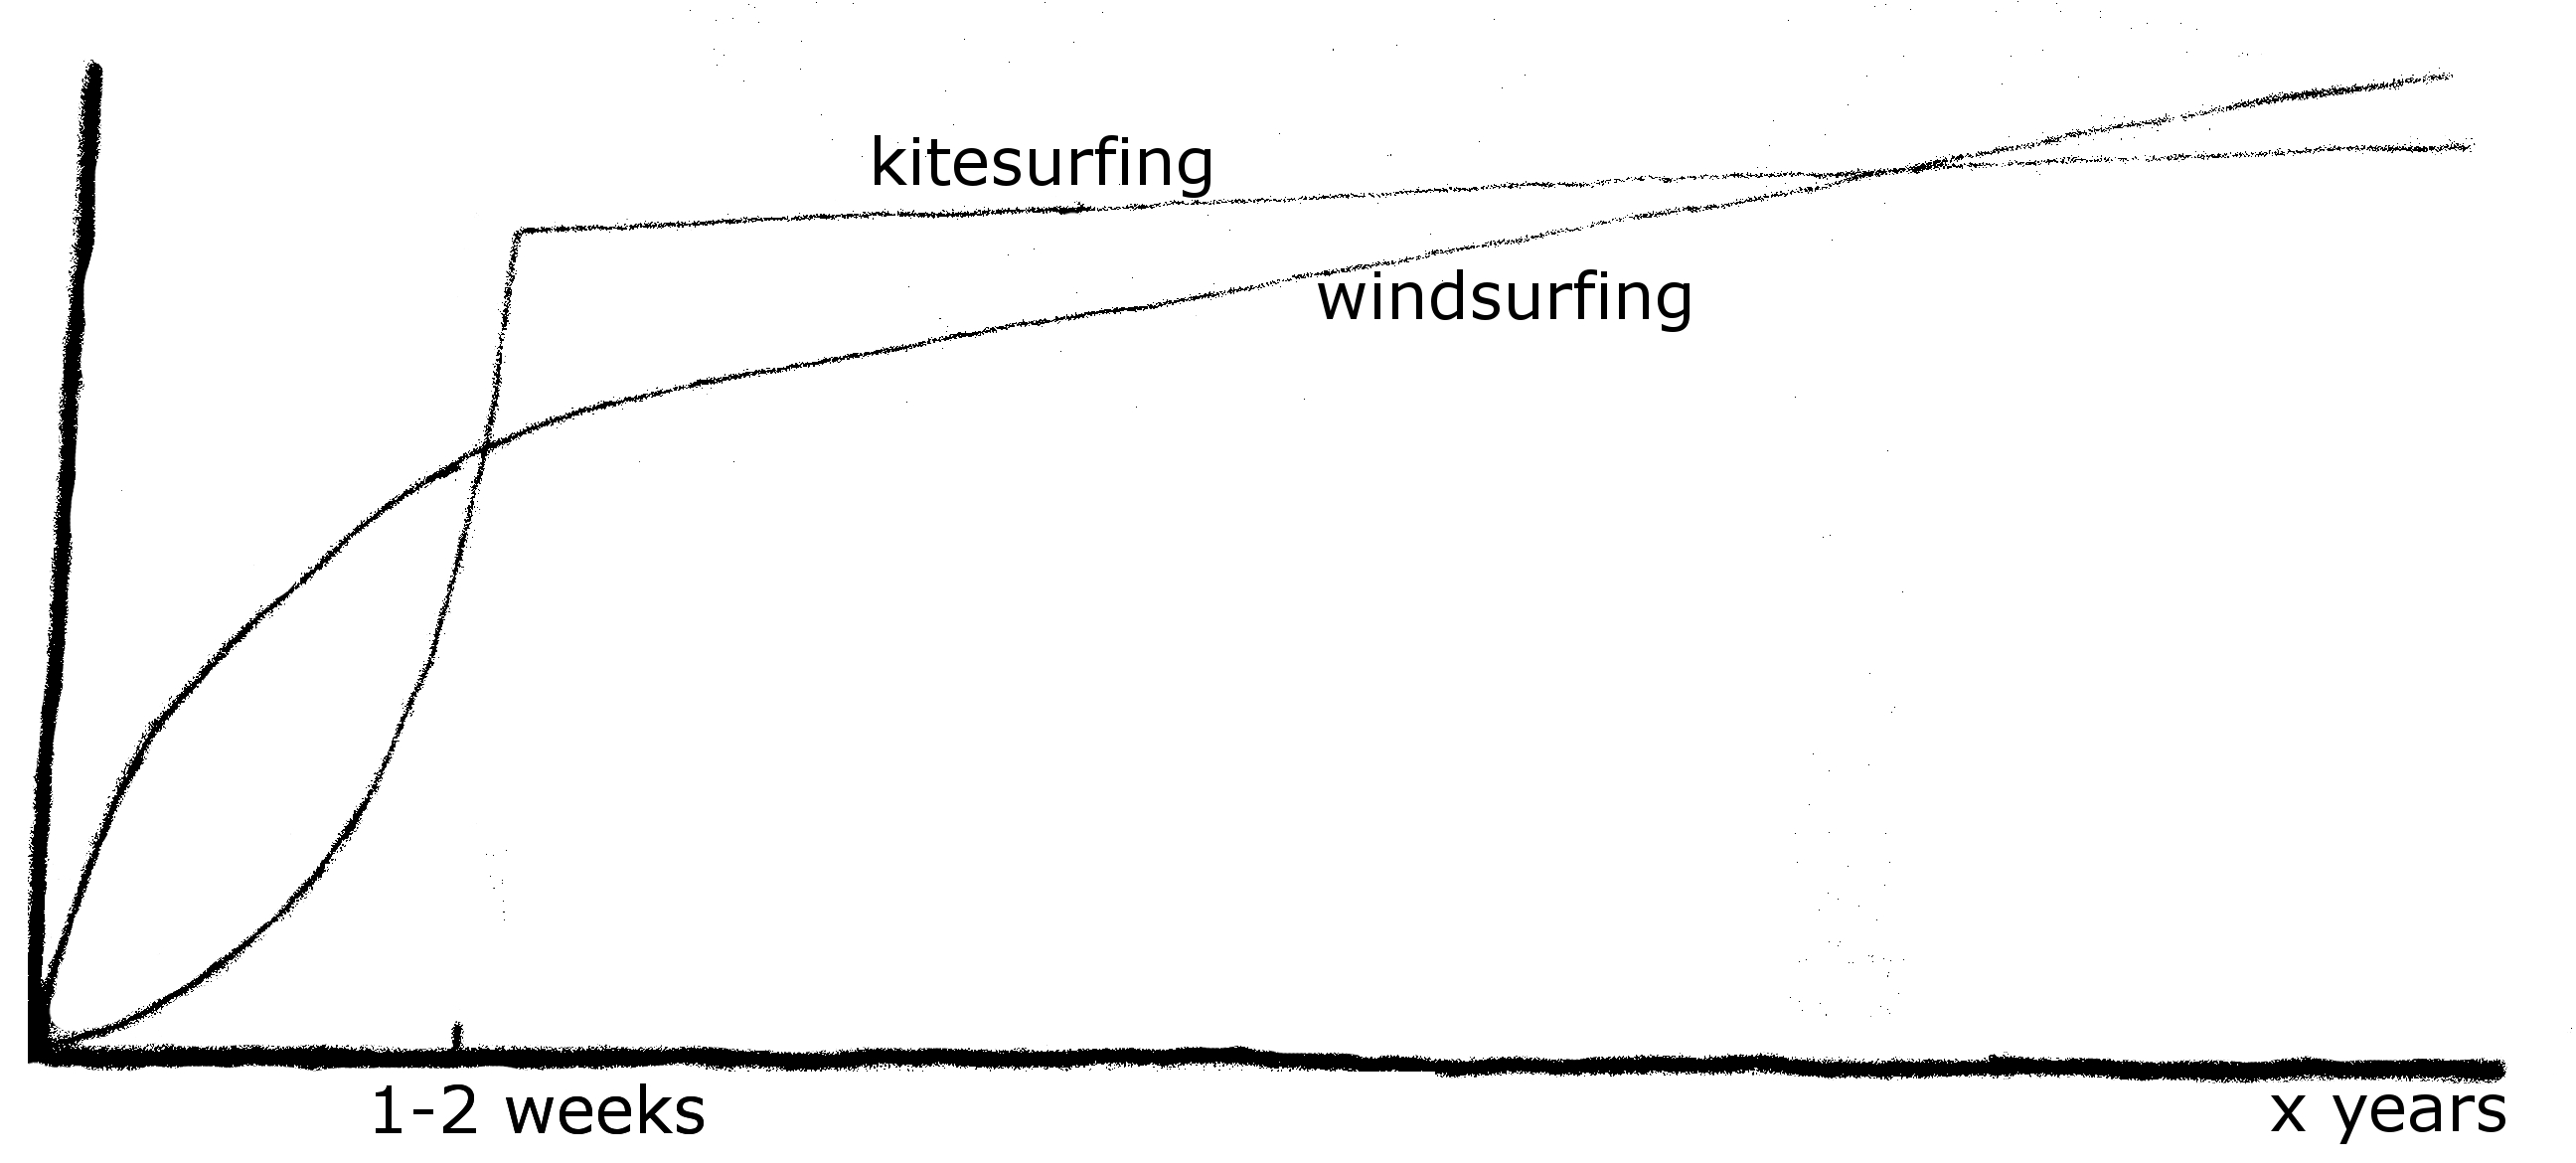 Kite Size Wind Chart